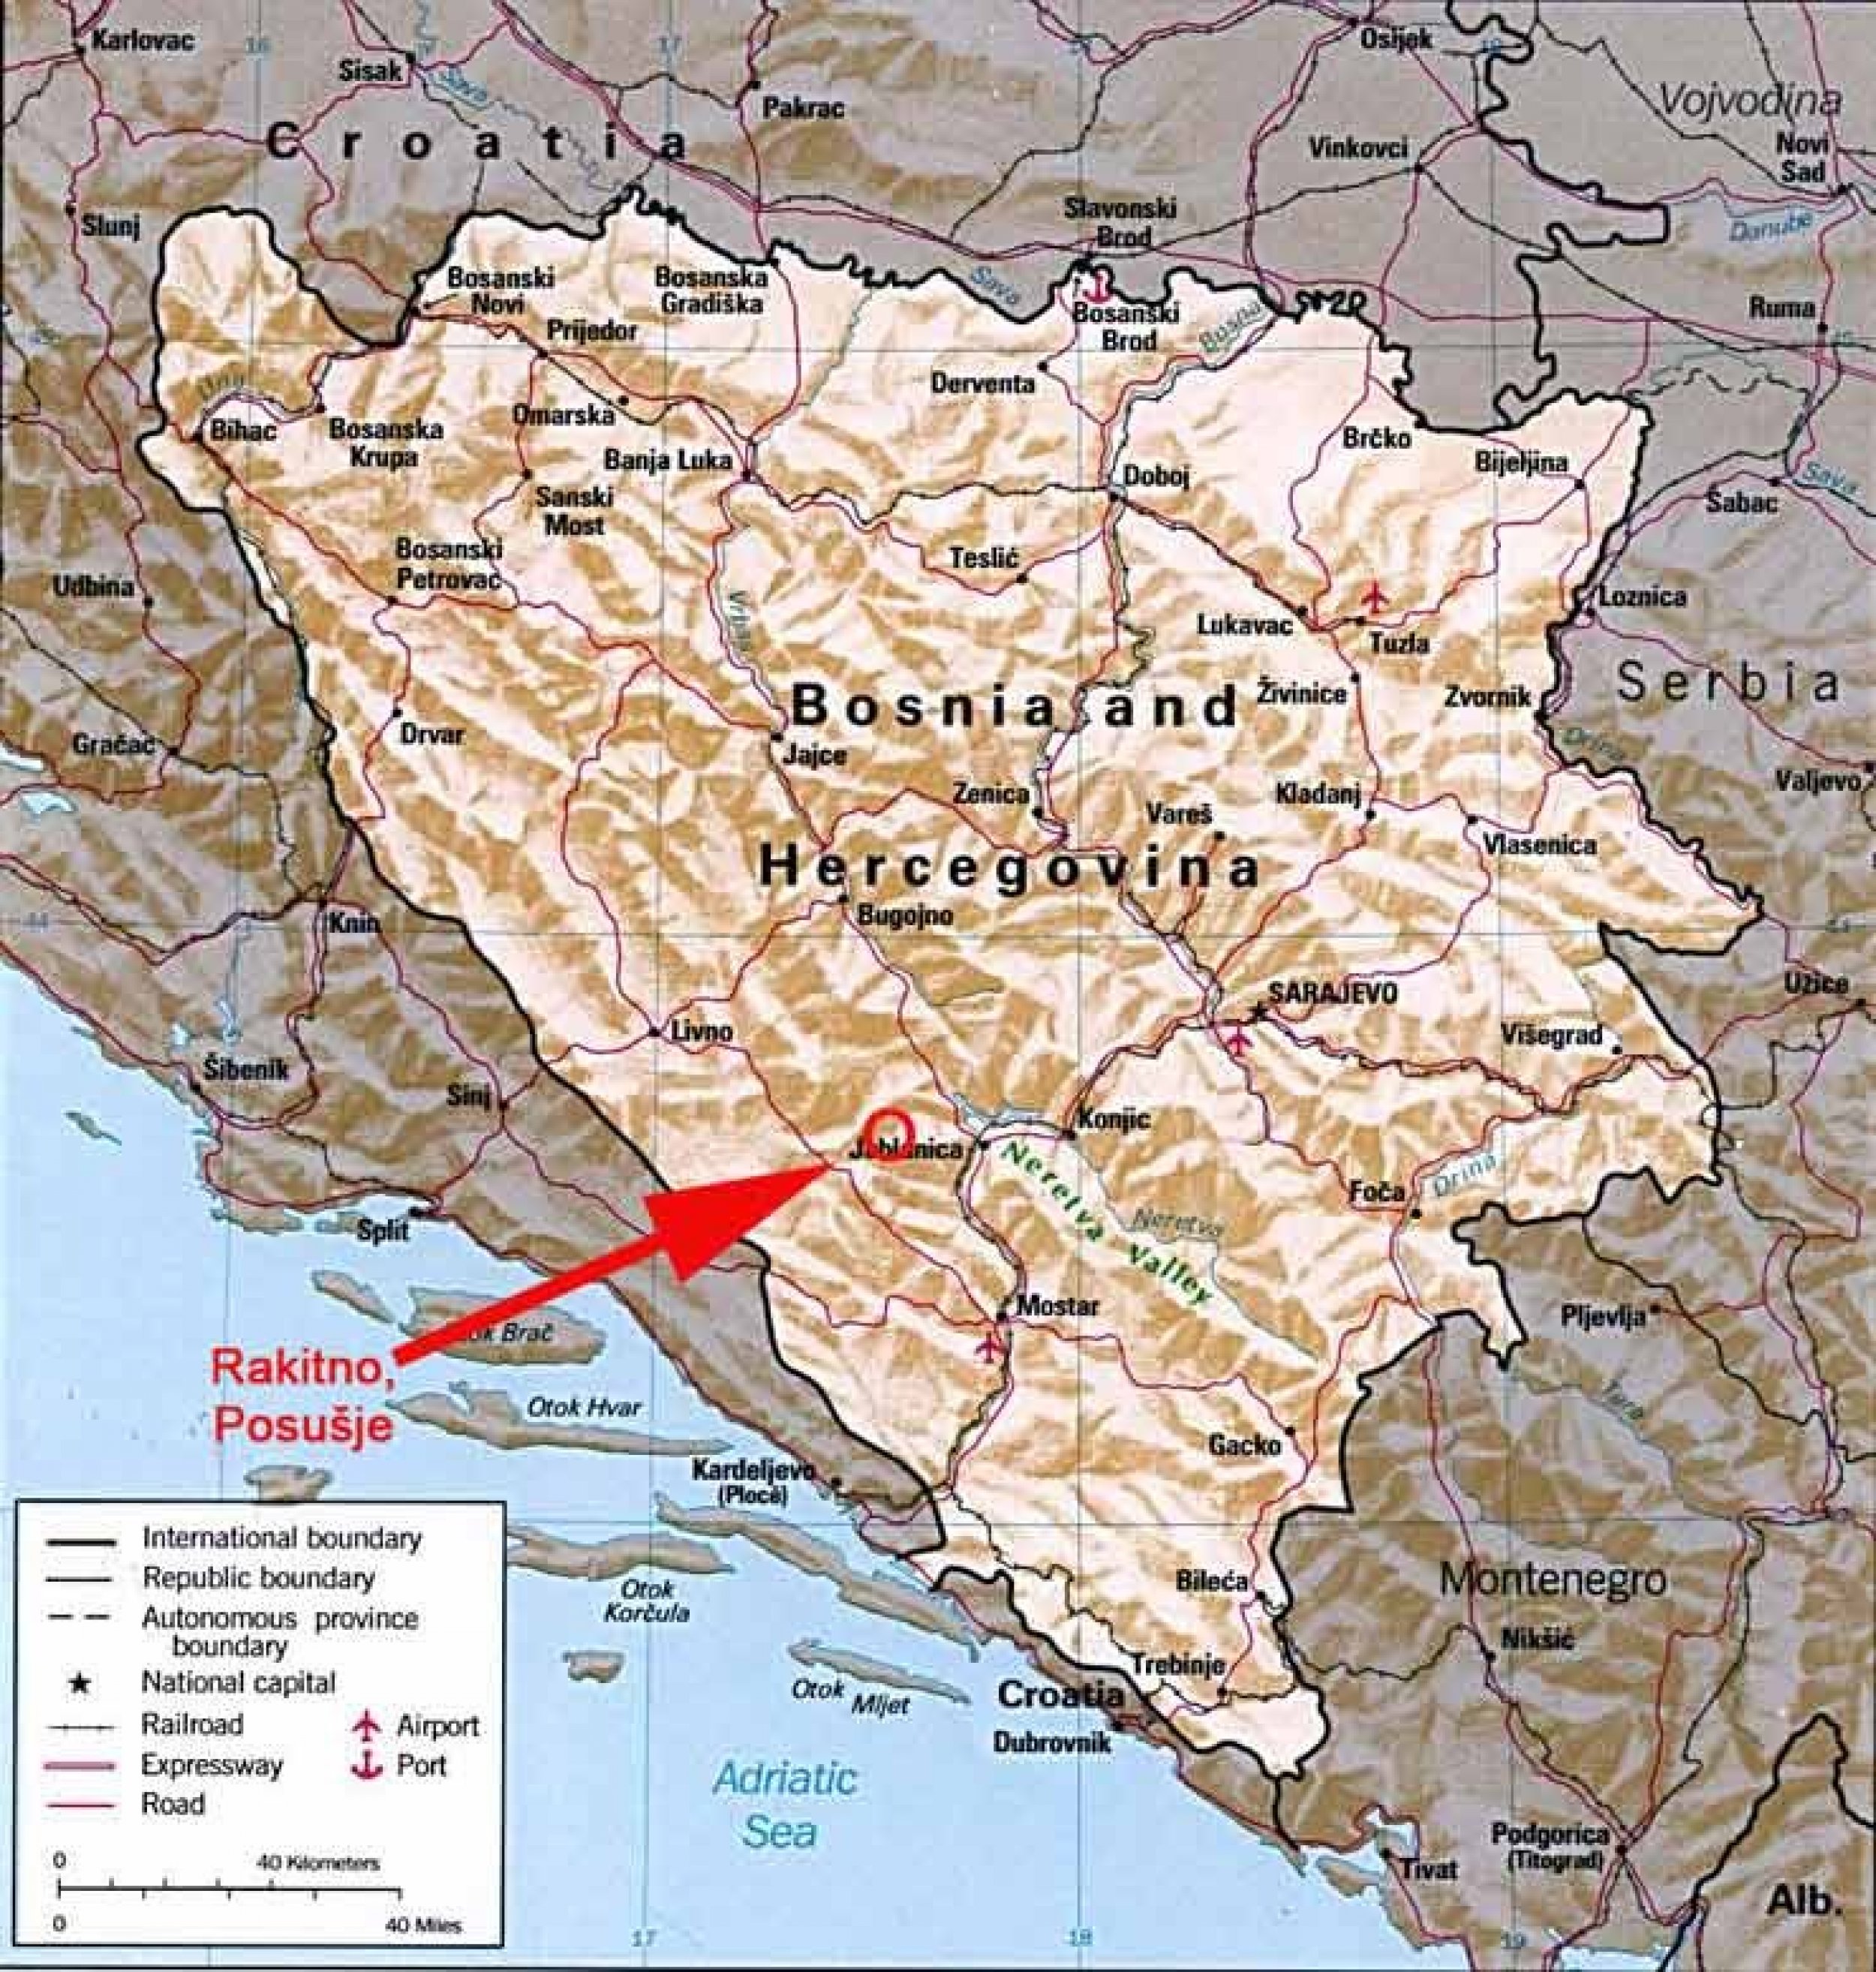 6 Bosnia-Herzegovina, 62.9